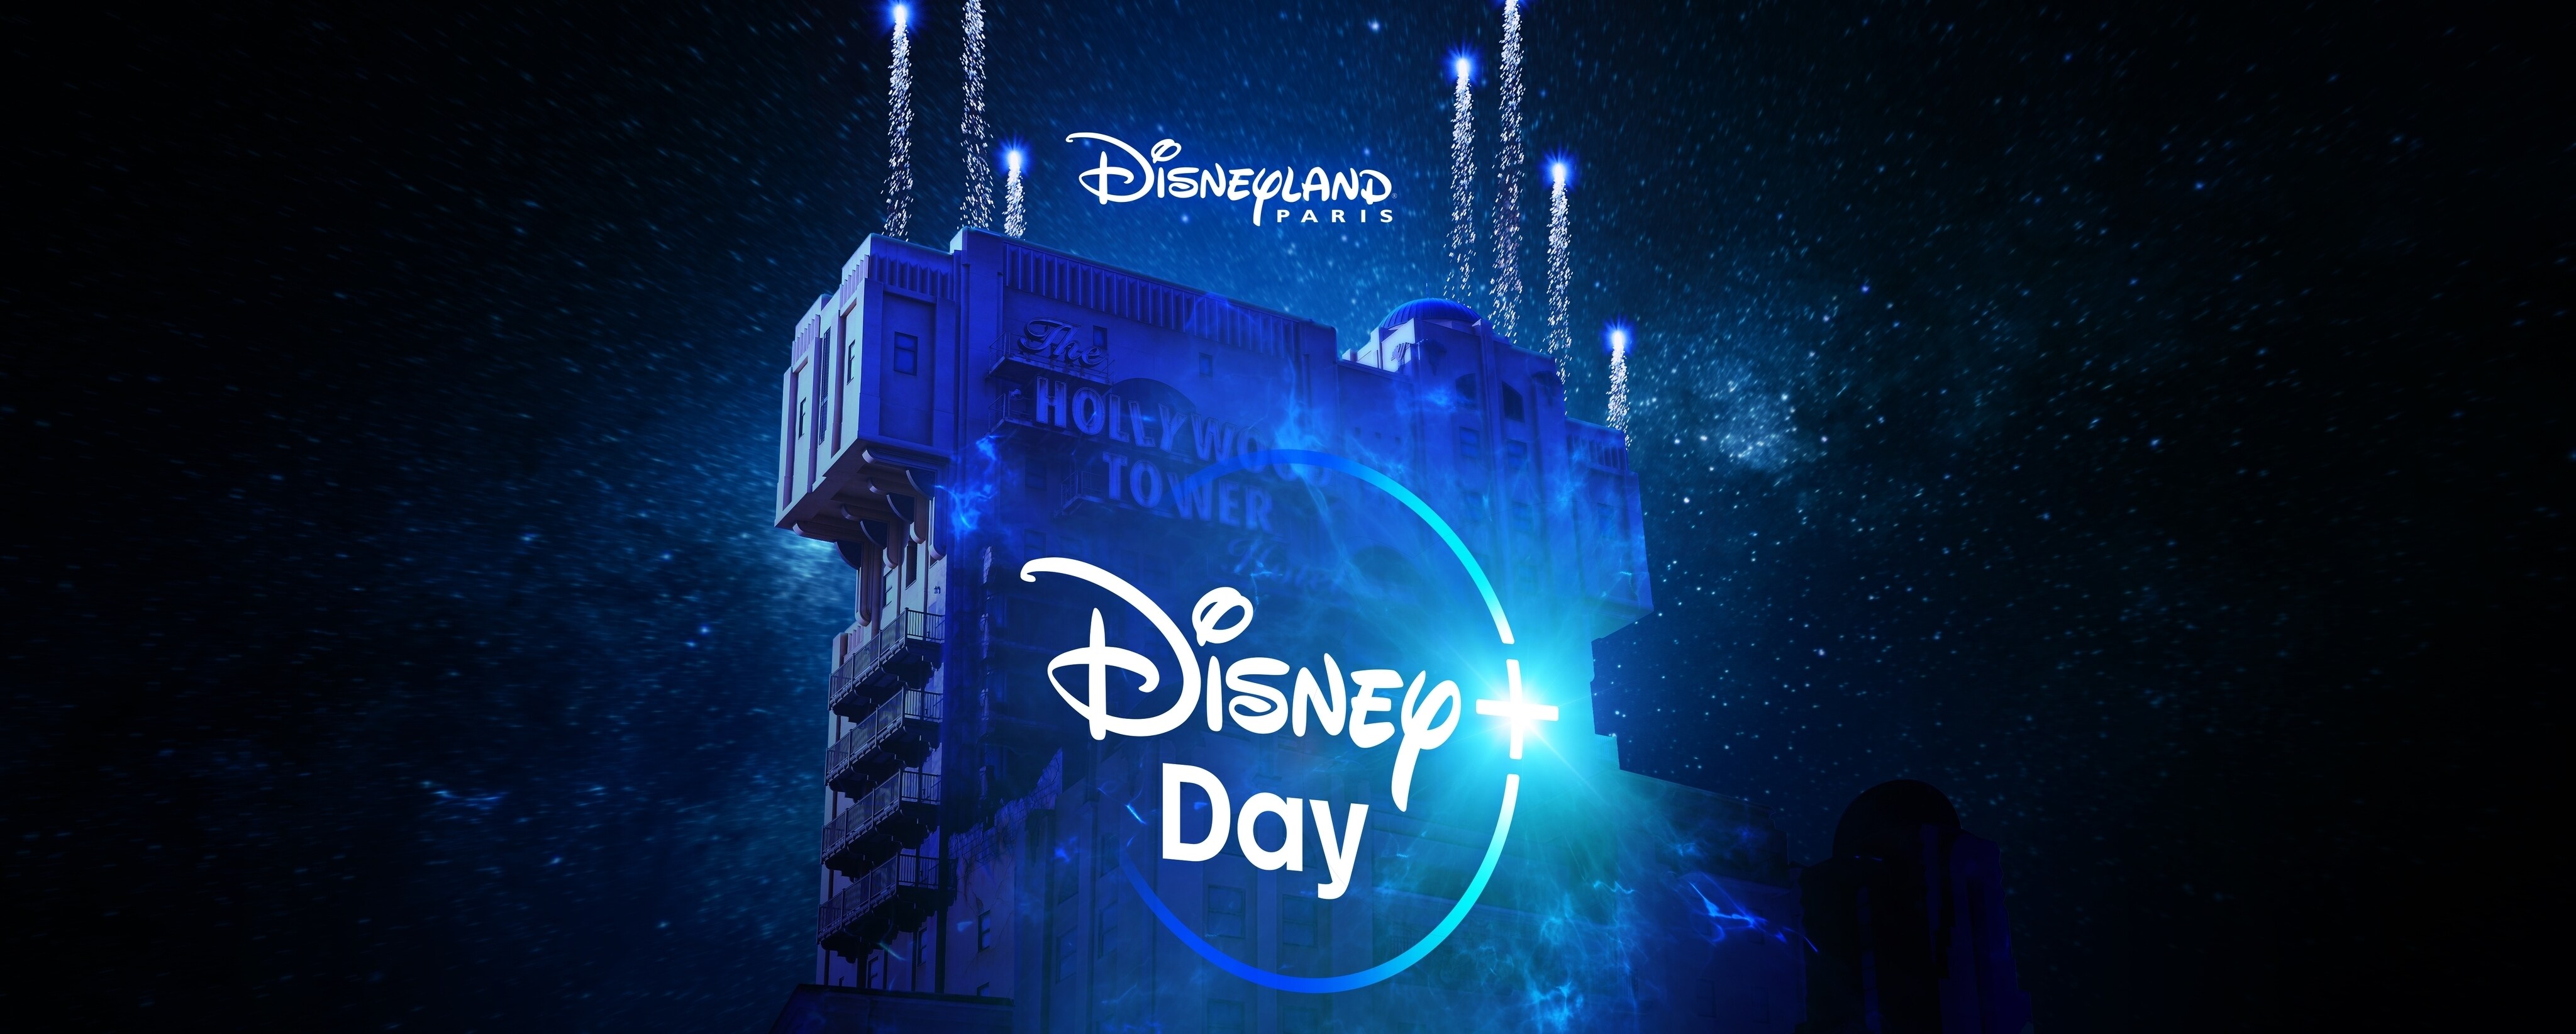 Disney+ Day Promotions Disney News